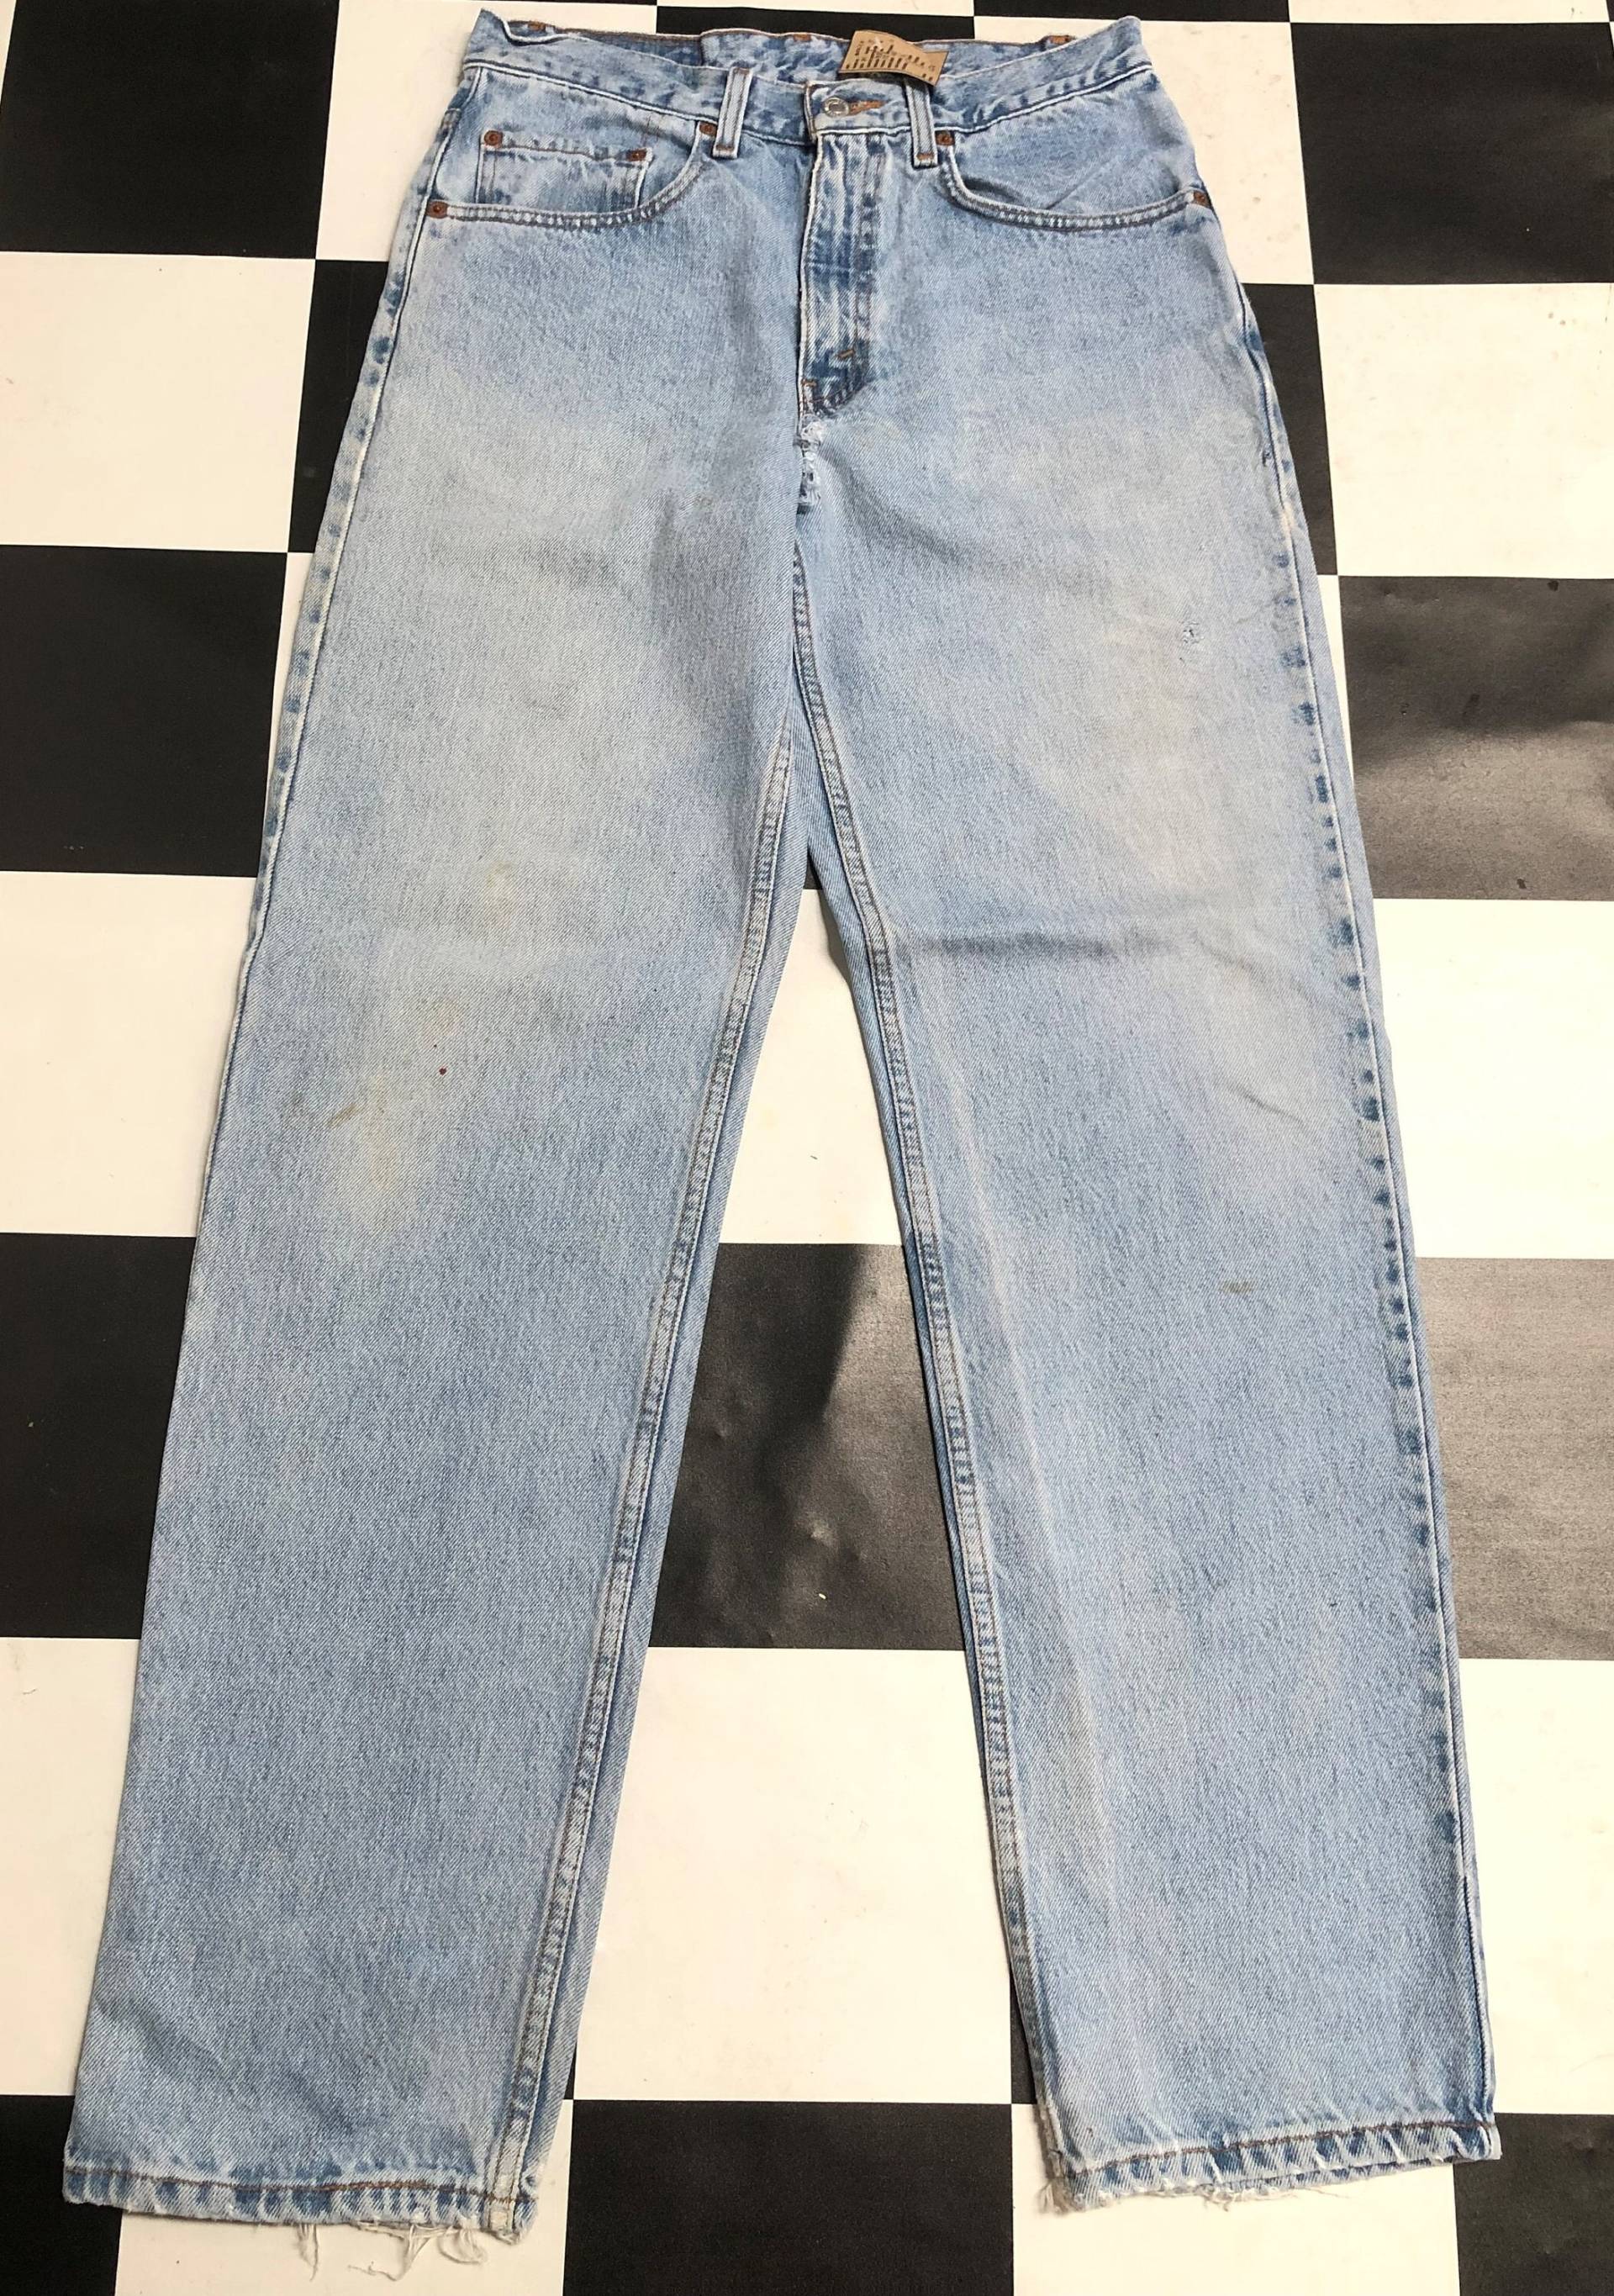 Vintage Levis 550 Jeans Zerrissene Distressed Jean Blue Faded Denim Light Washed Männer Taille 31 von RezekiShopRoom